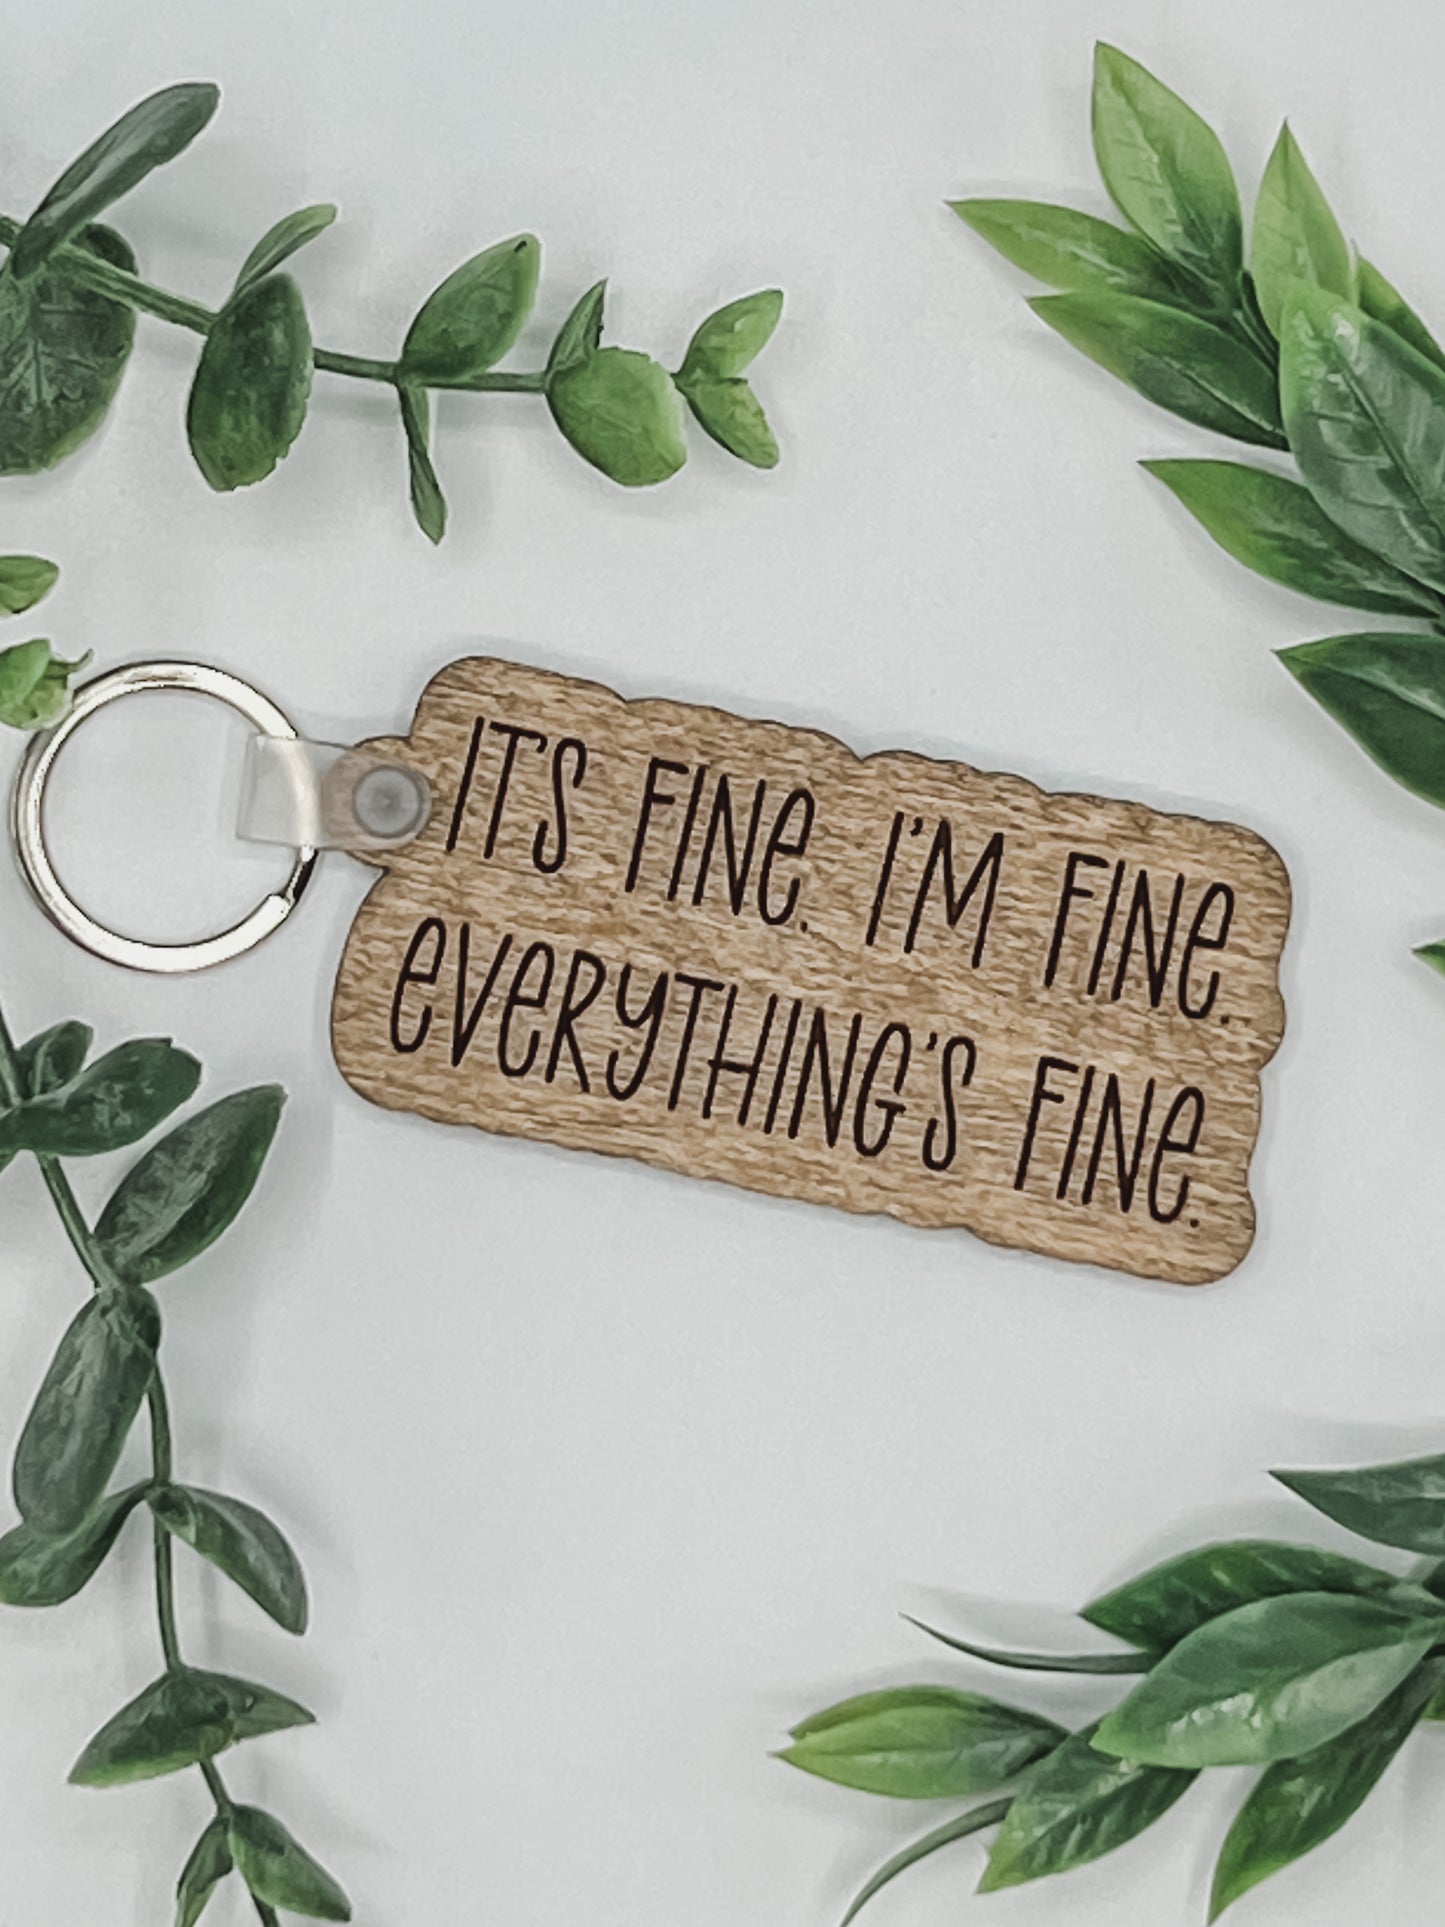 It’s fine, I’m fine, everything’s fine